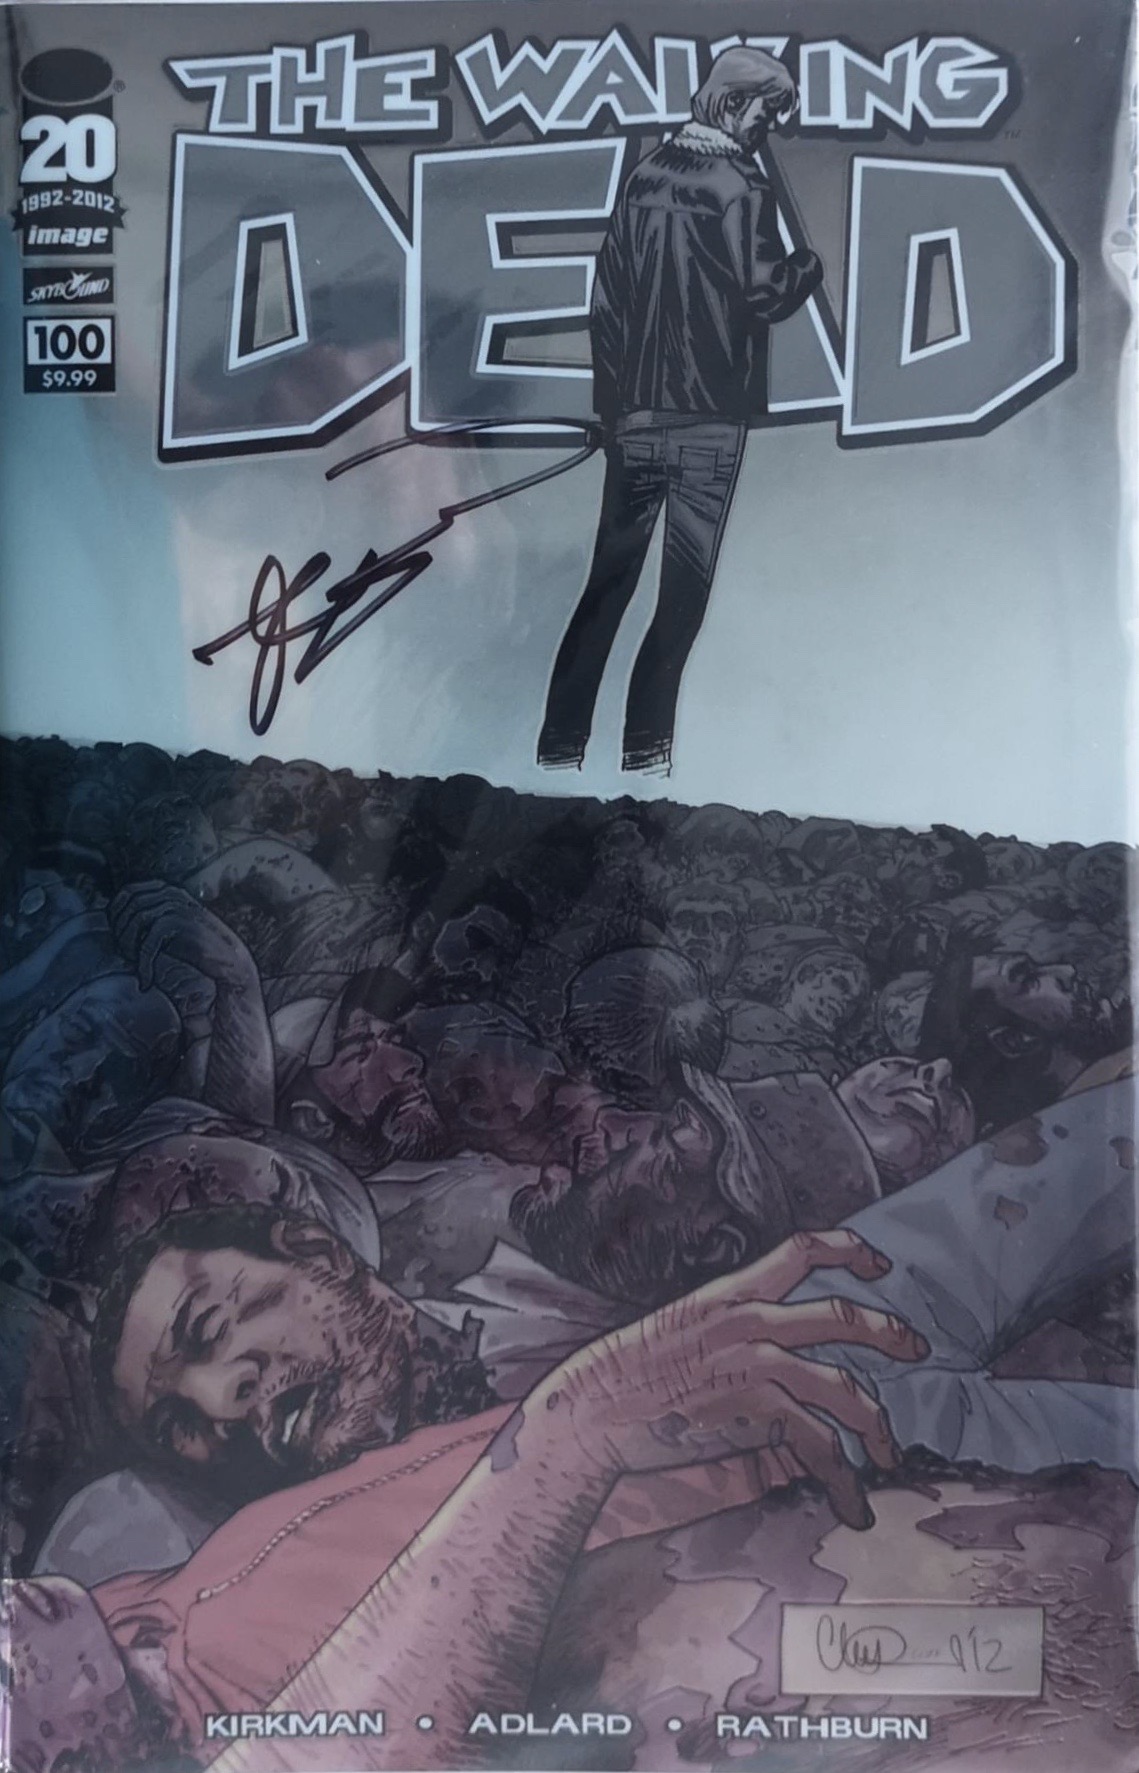 The Walking Dead # 100 signé par Robert Kirkman